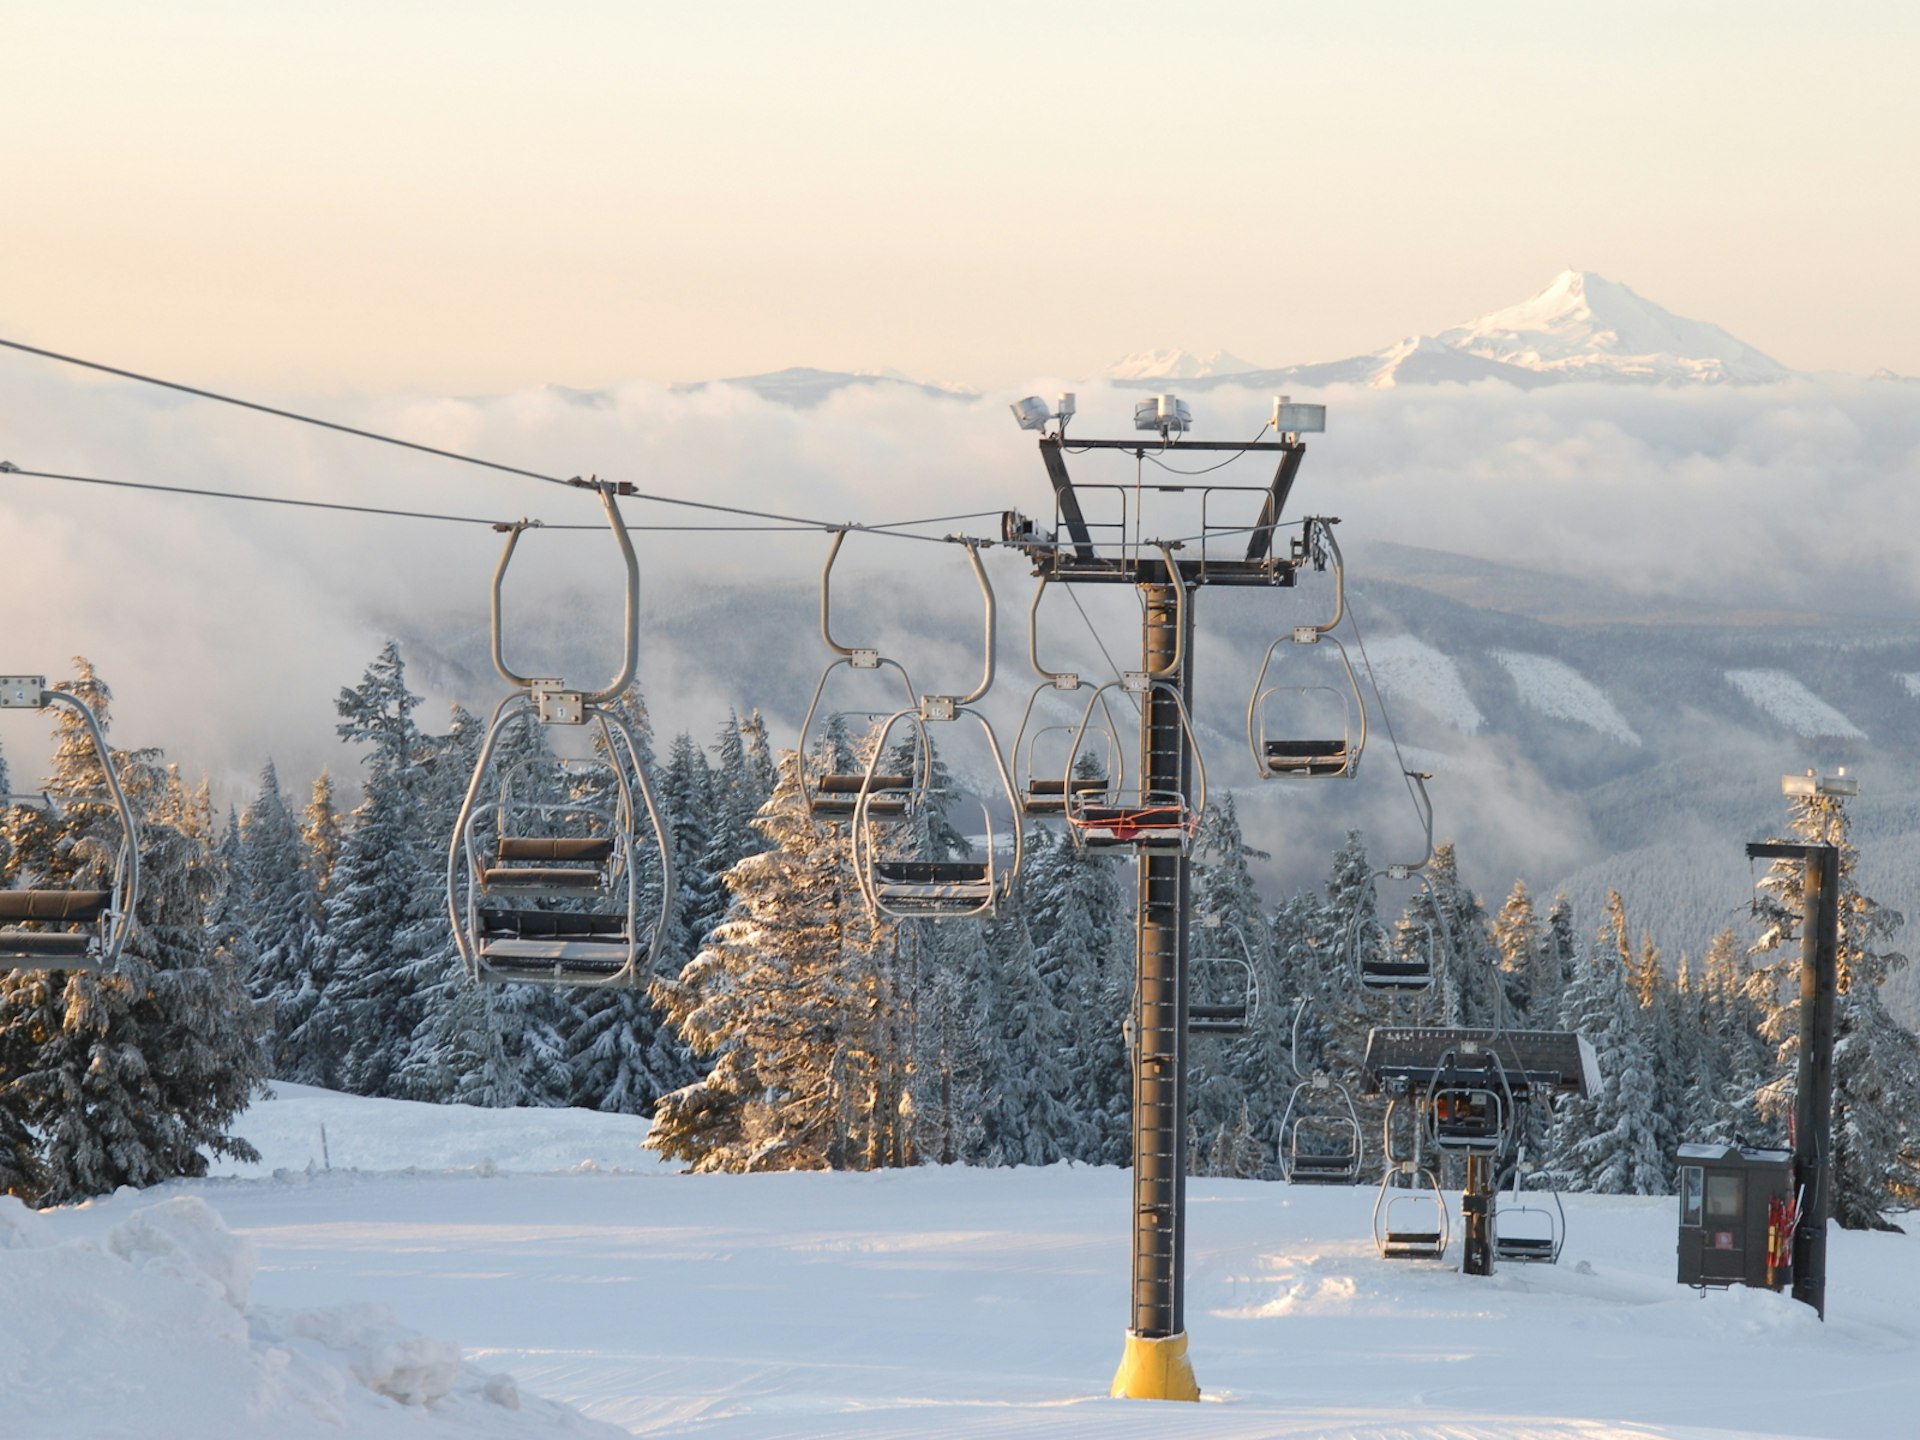 A ski lift going through the snowy scenery of Mt Hood's Timberline ski area, Oregon